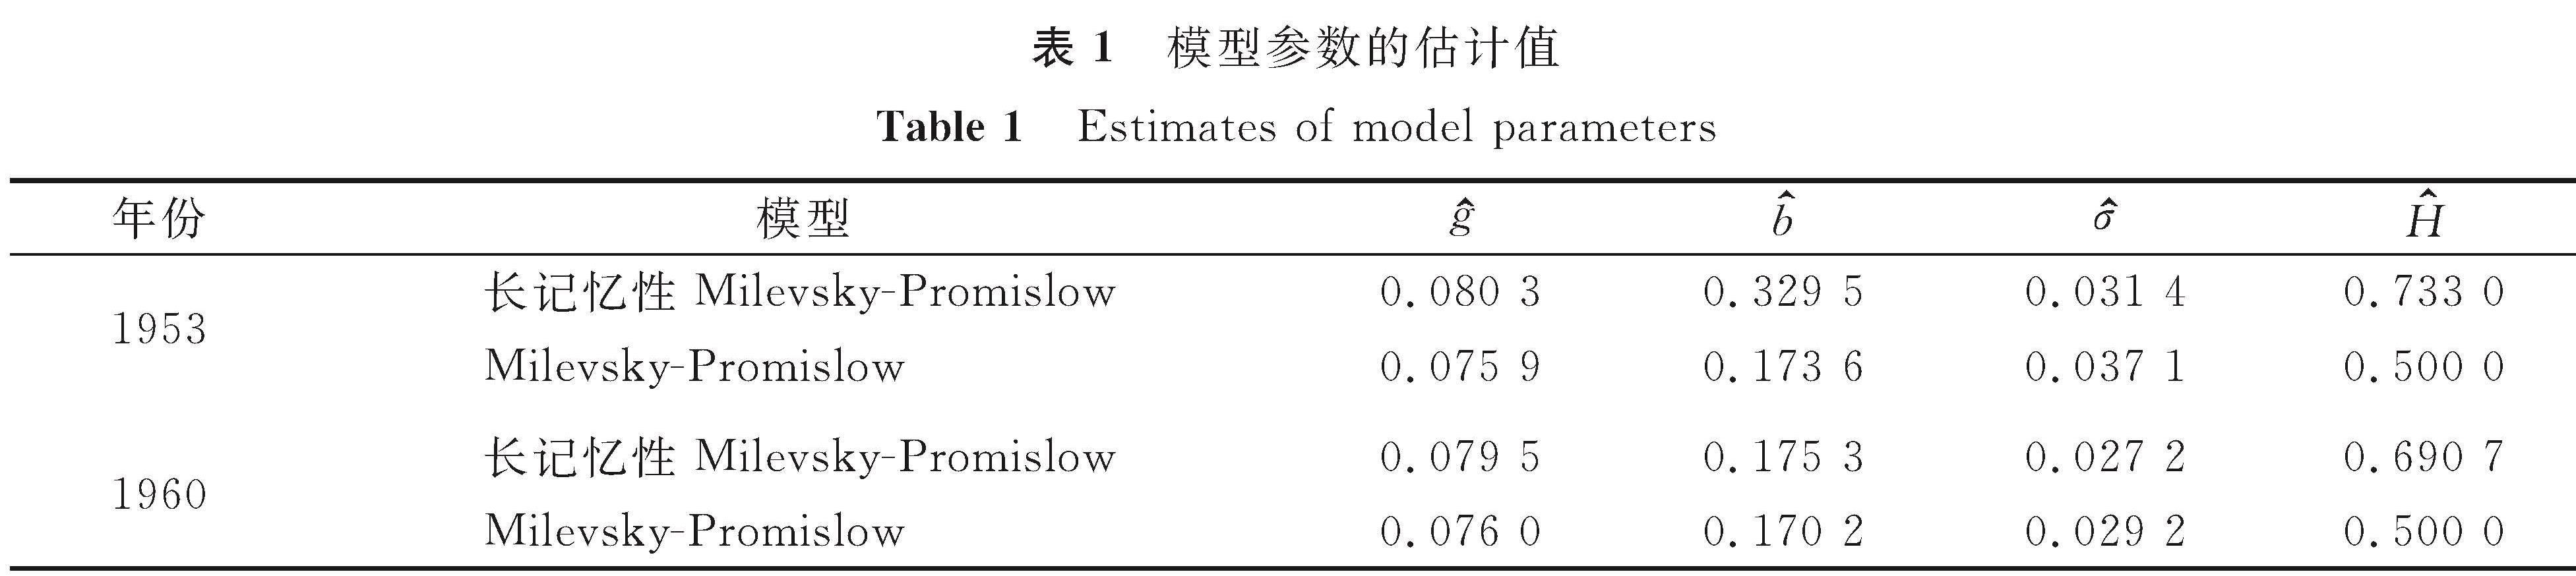 表1 模型参数的估计值<br/>Table 1 Estimates of model parameters